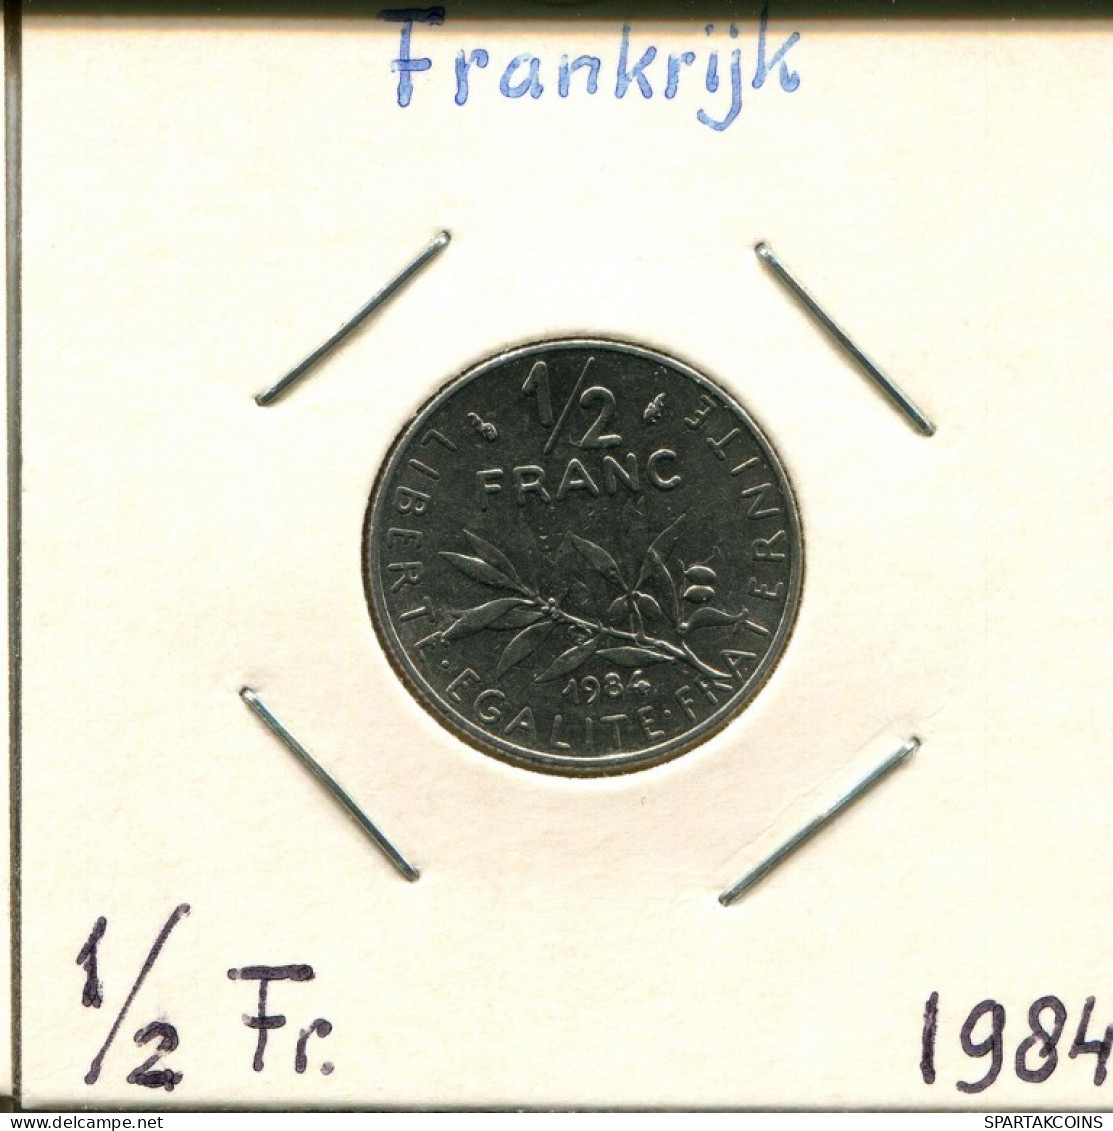 1/2 FRANC 1984 FRANCE Coin French Coin #AM252.U.A - 1/2 Franc